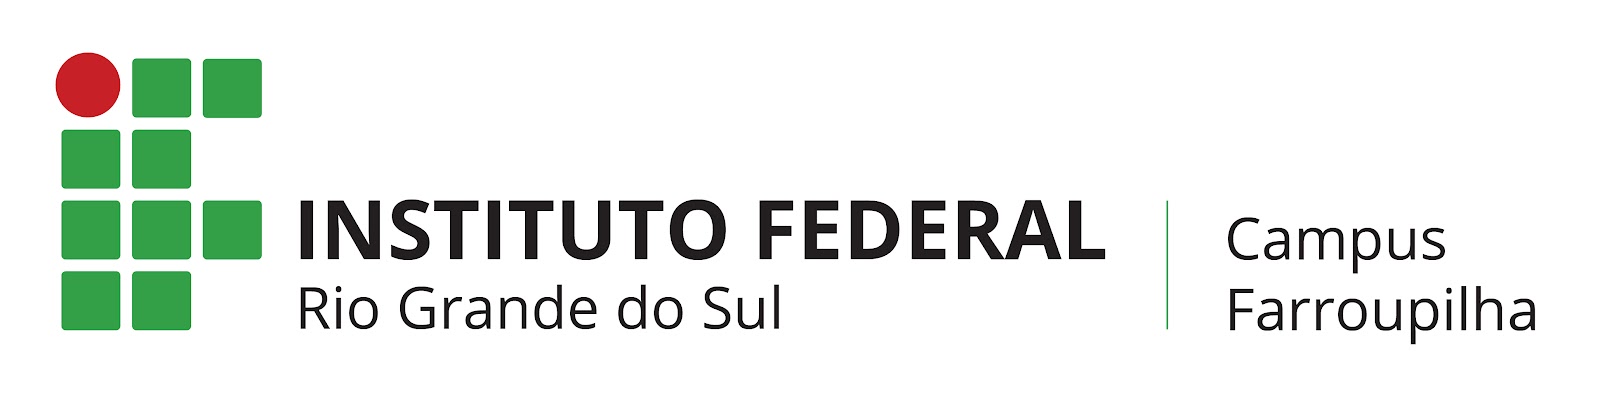 Logo_IFRS_Farroupilha_Novo.jpg